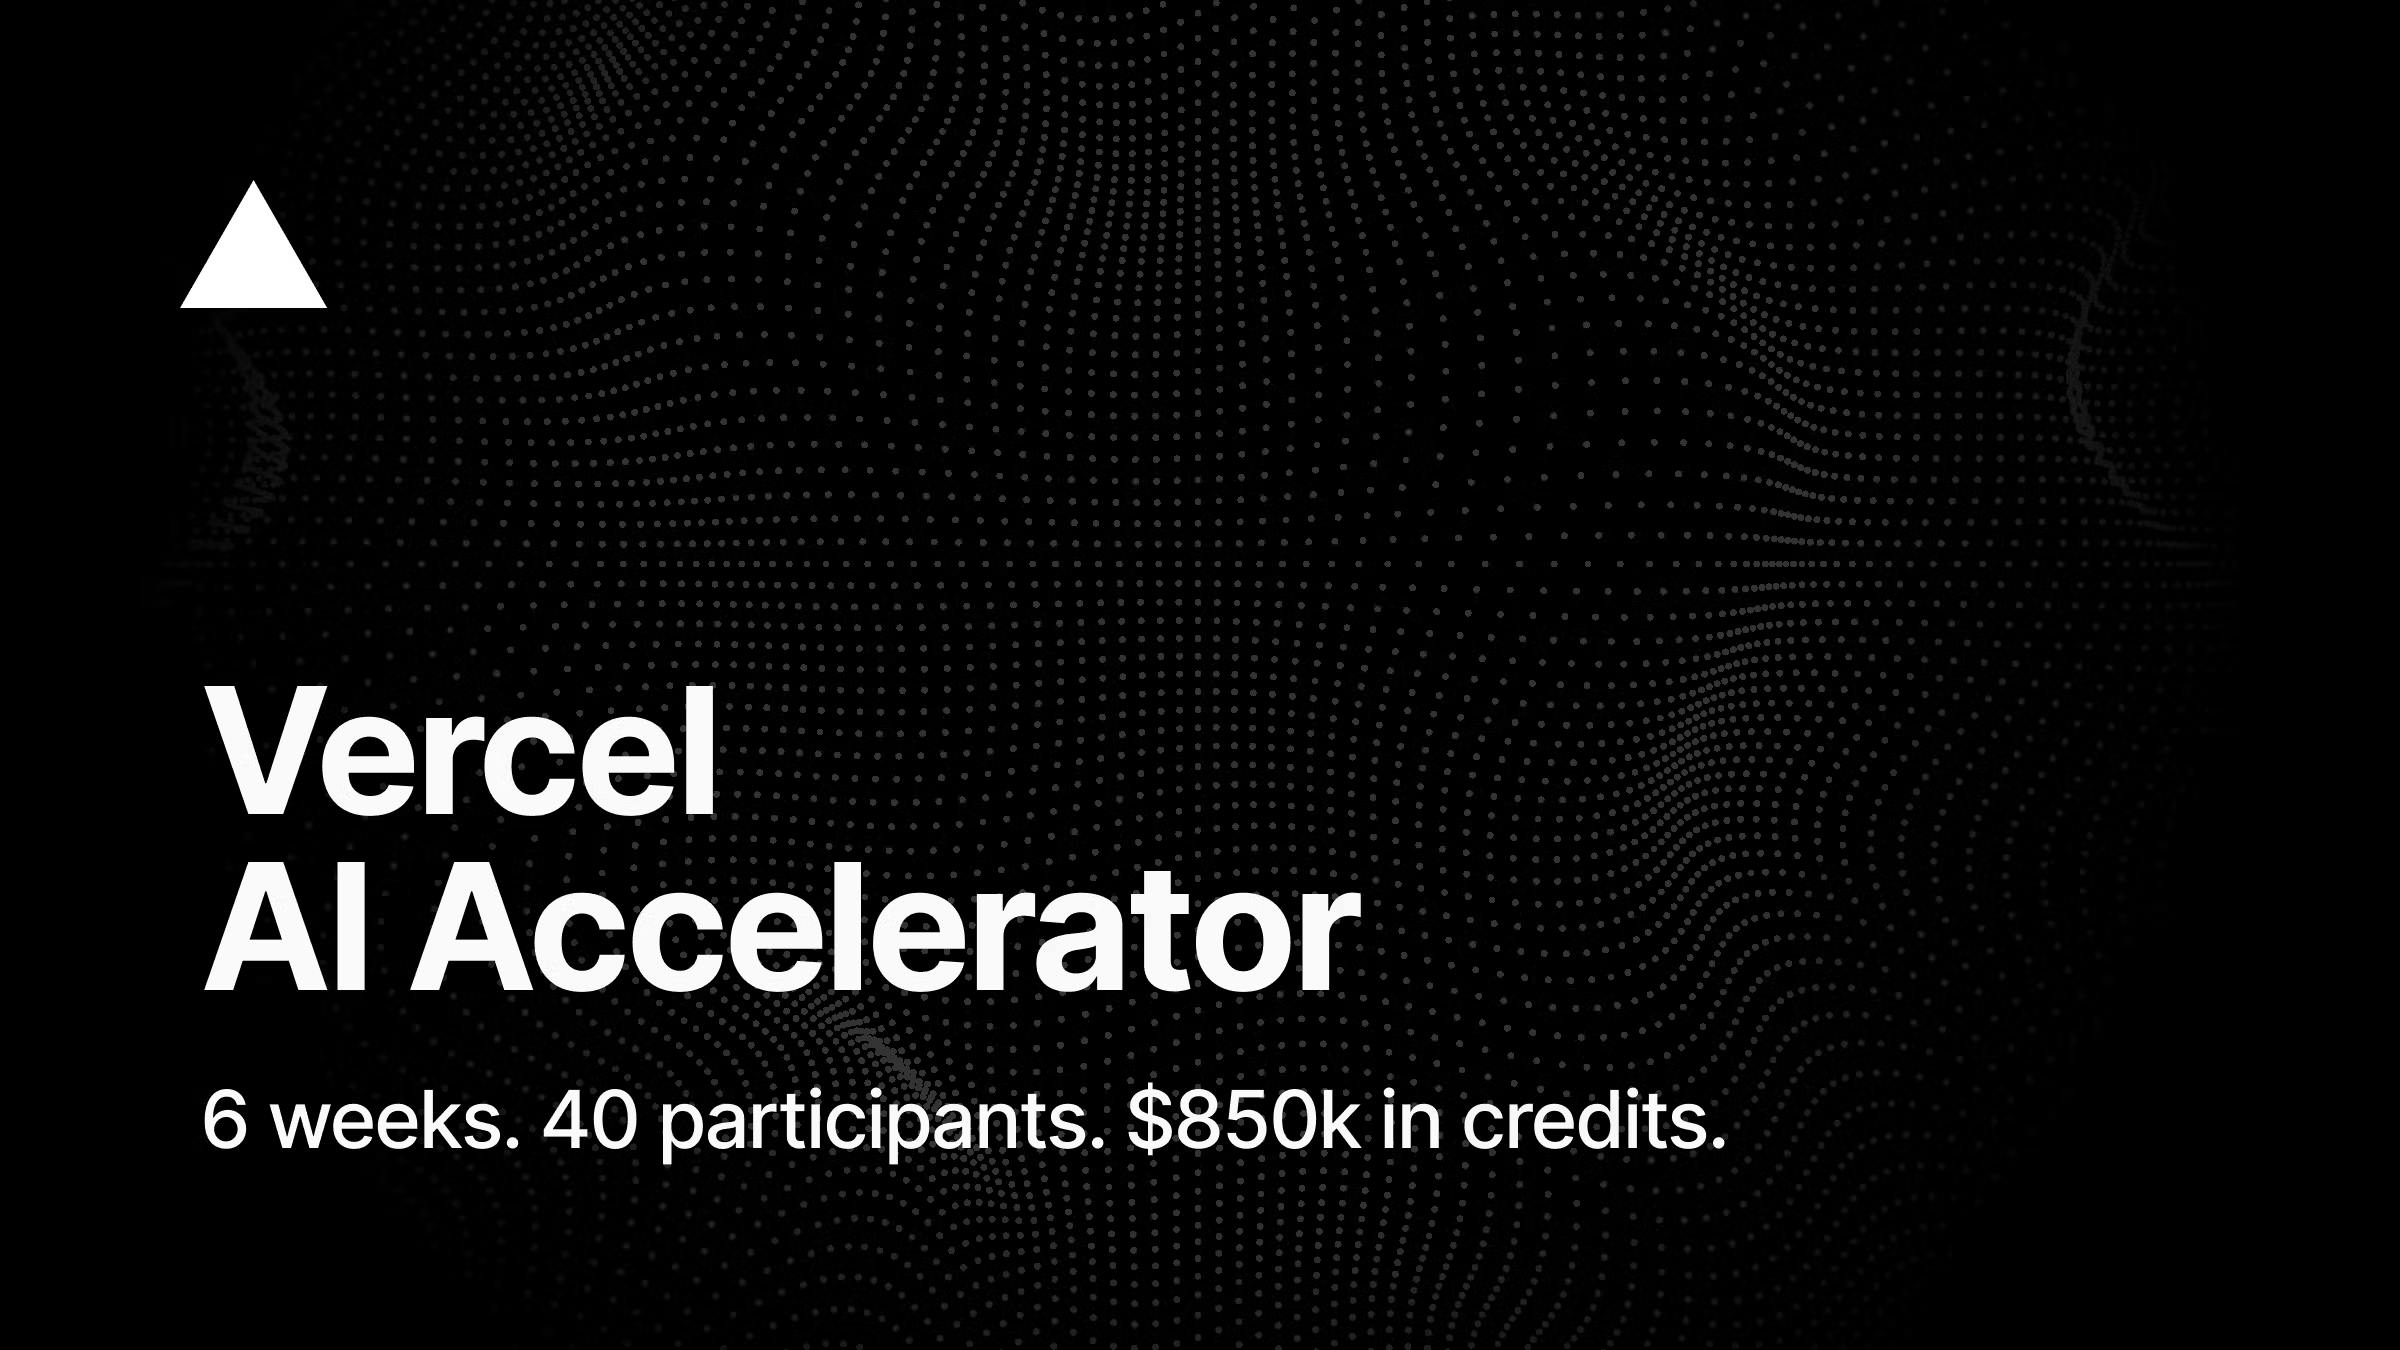 Meet the Vercel AI Accelerator Participants